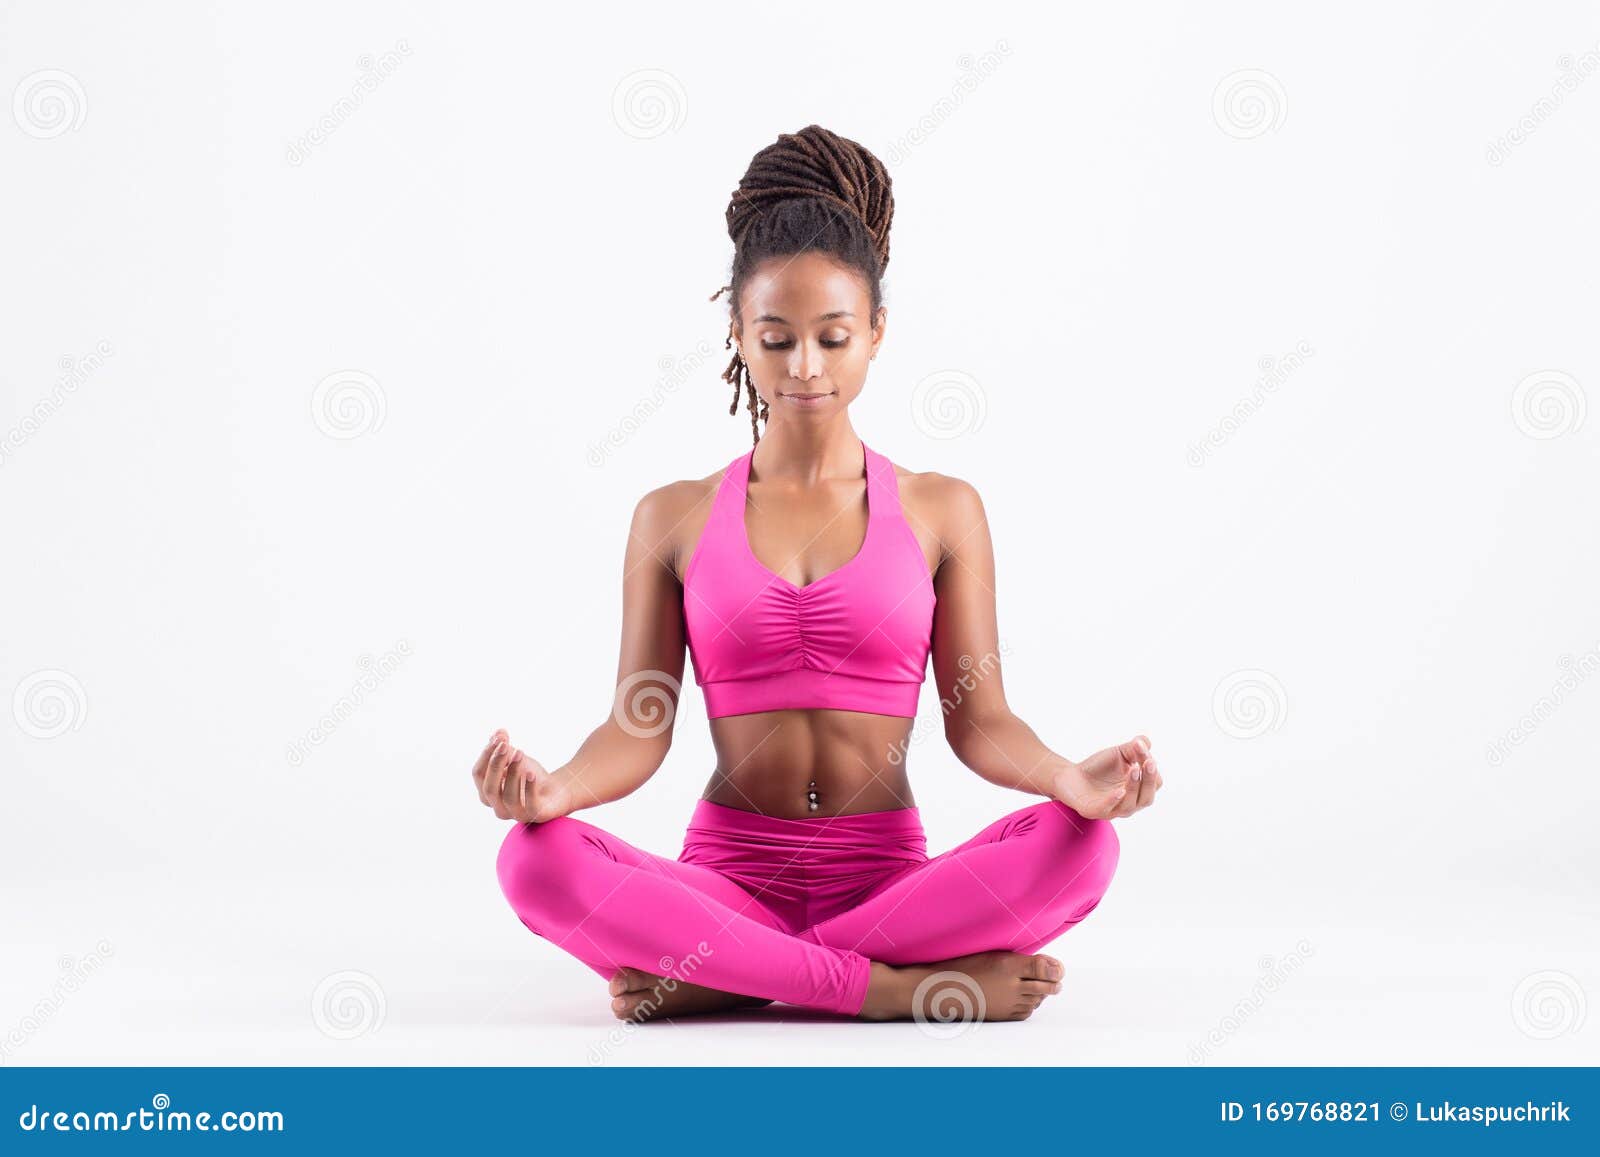 Black Girls In Yoga Pants